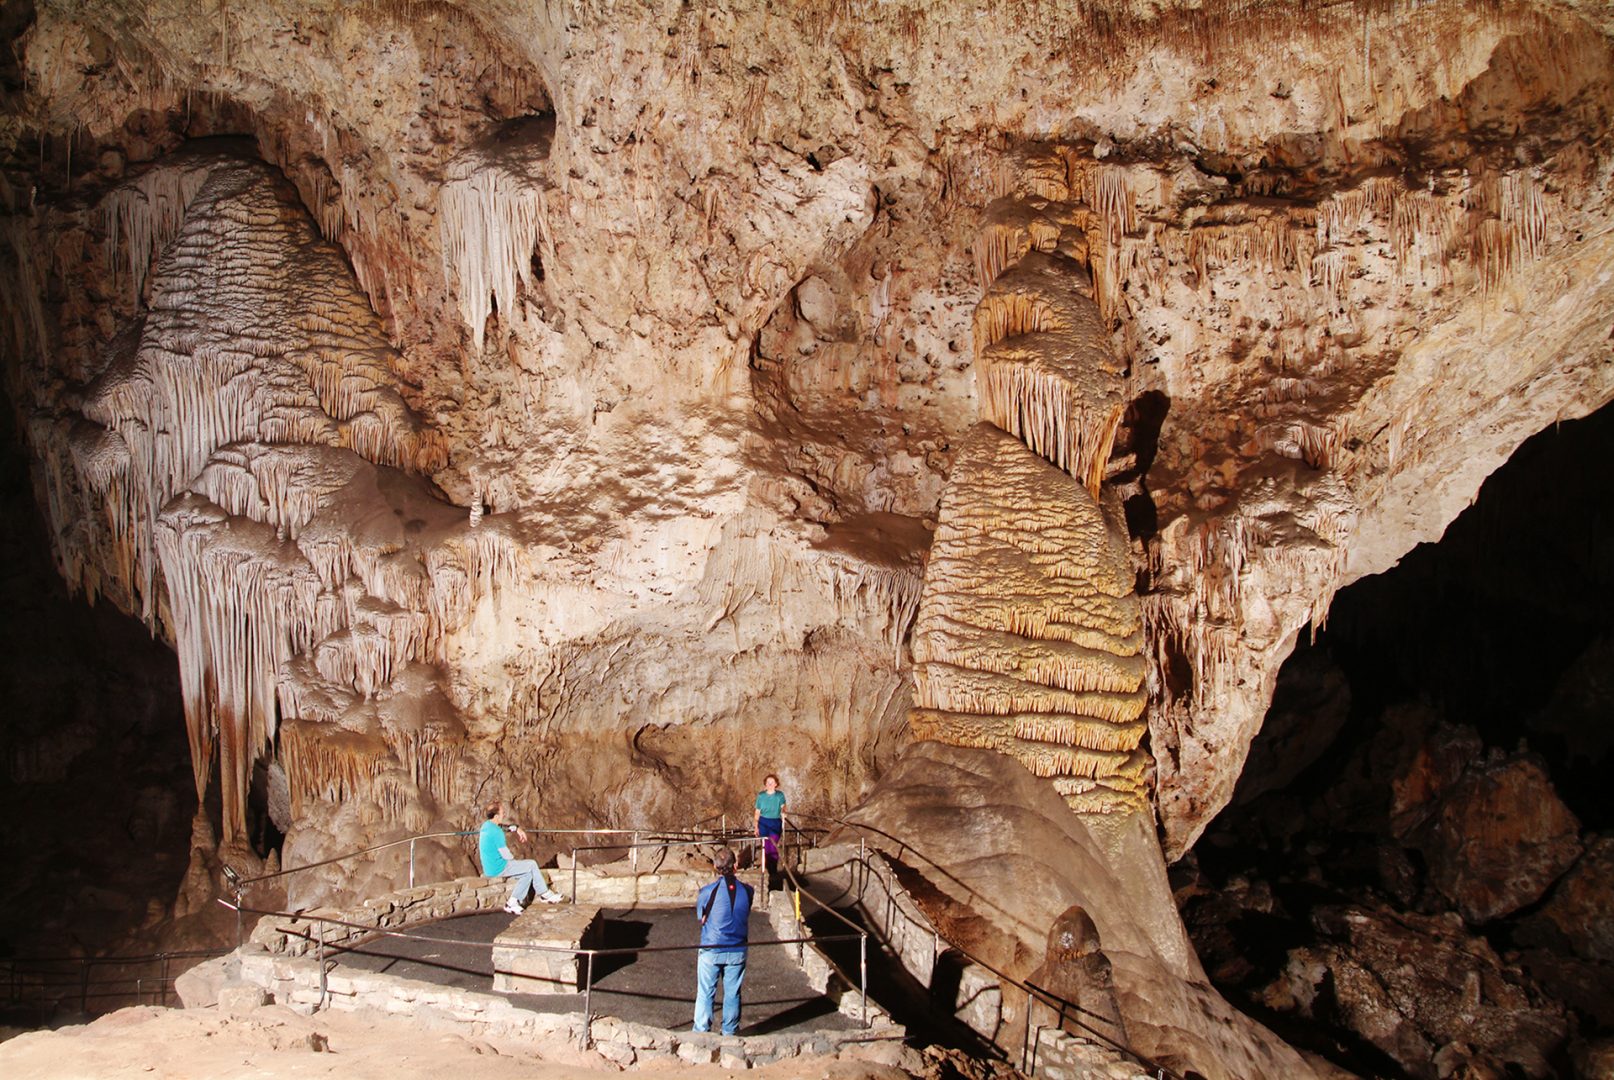 Visitors explore Carlsbad Caverns National Park